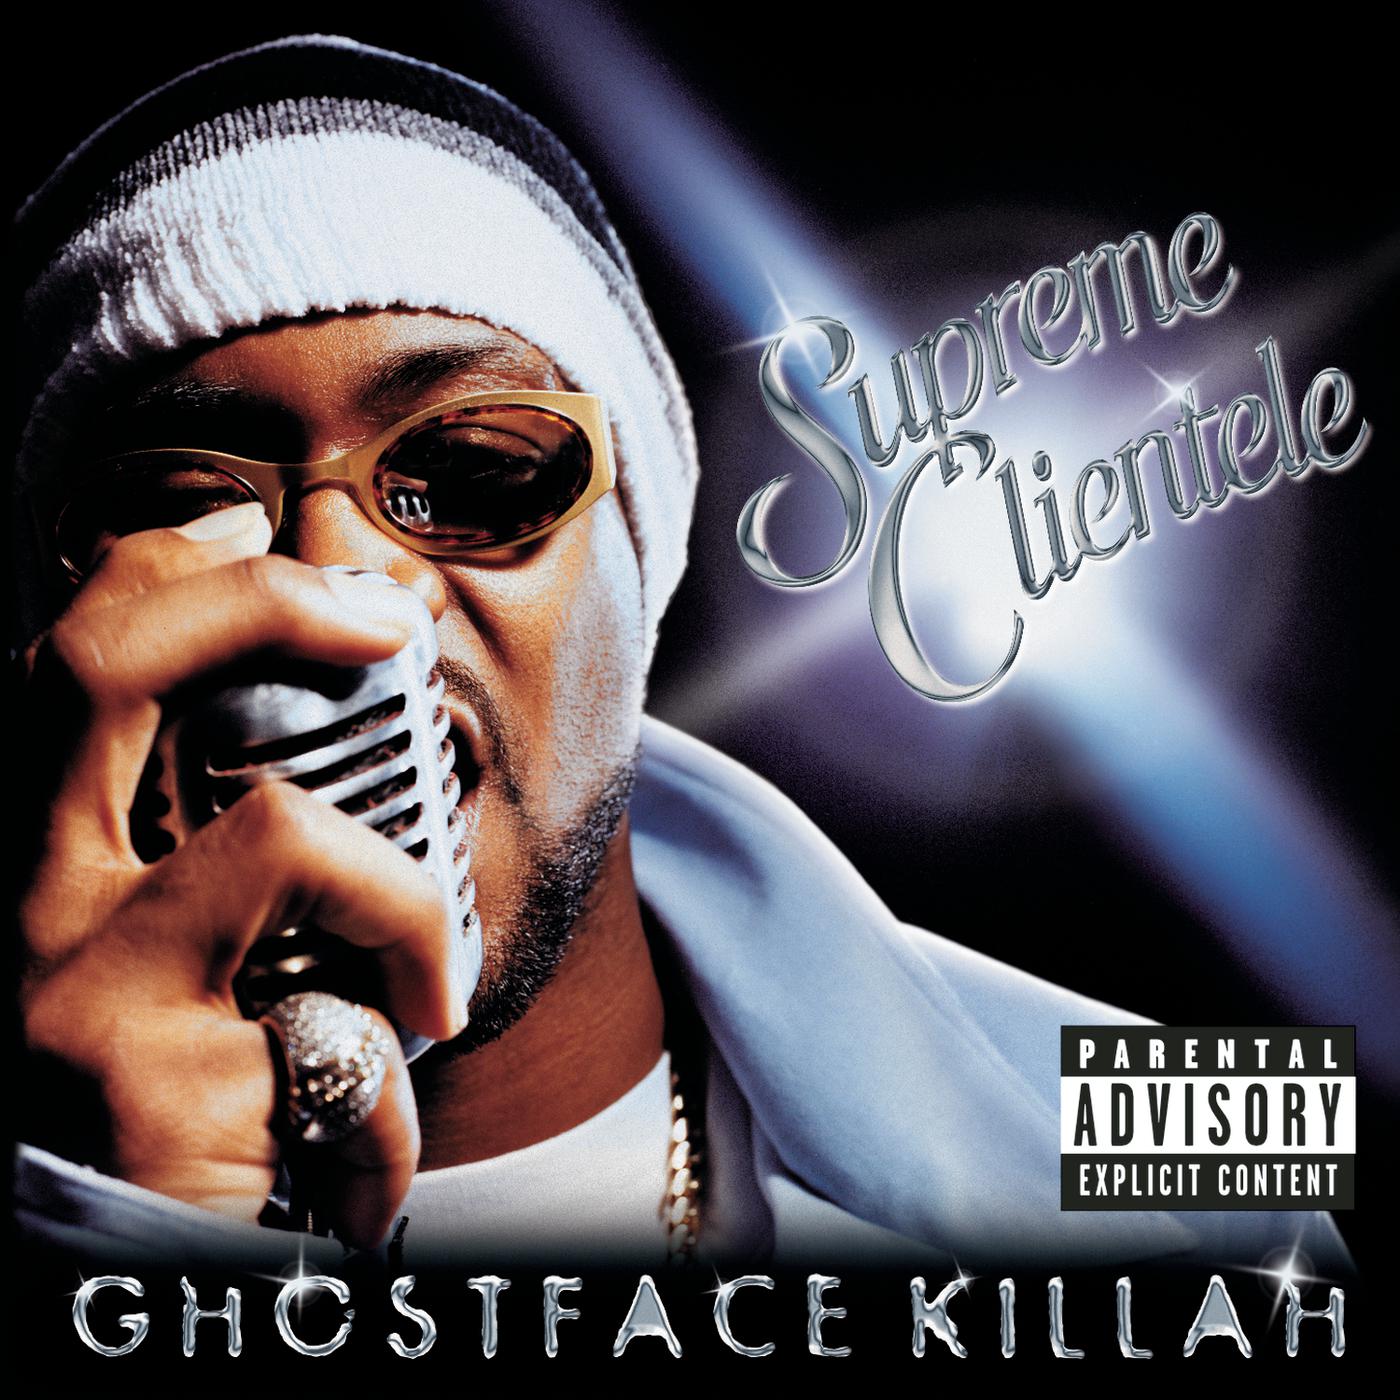 Ghostface Killah - Stay True